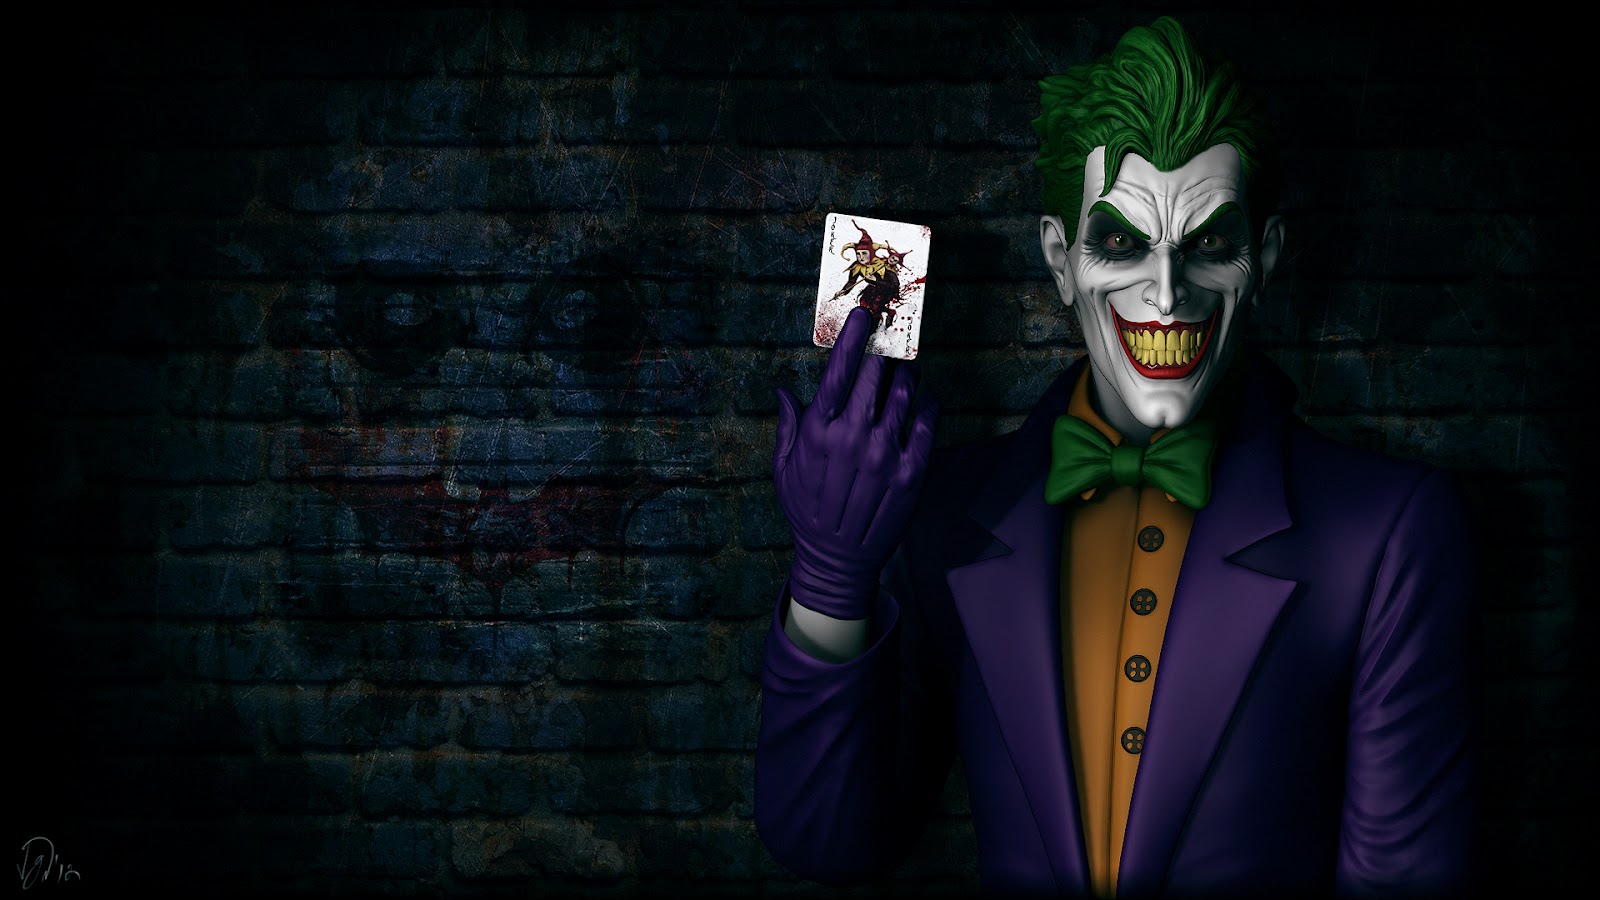 Joker_HiRes.jpg